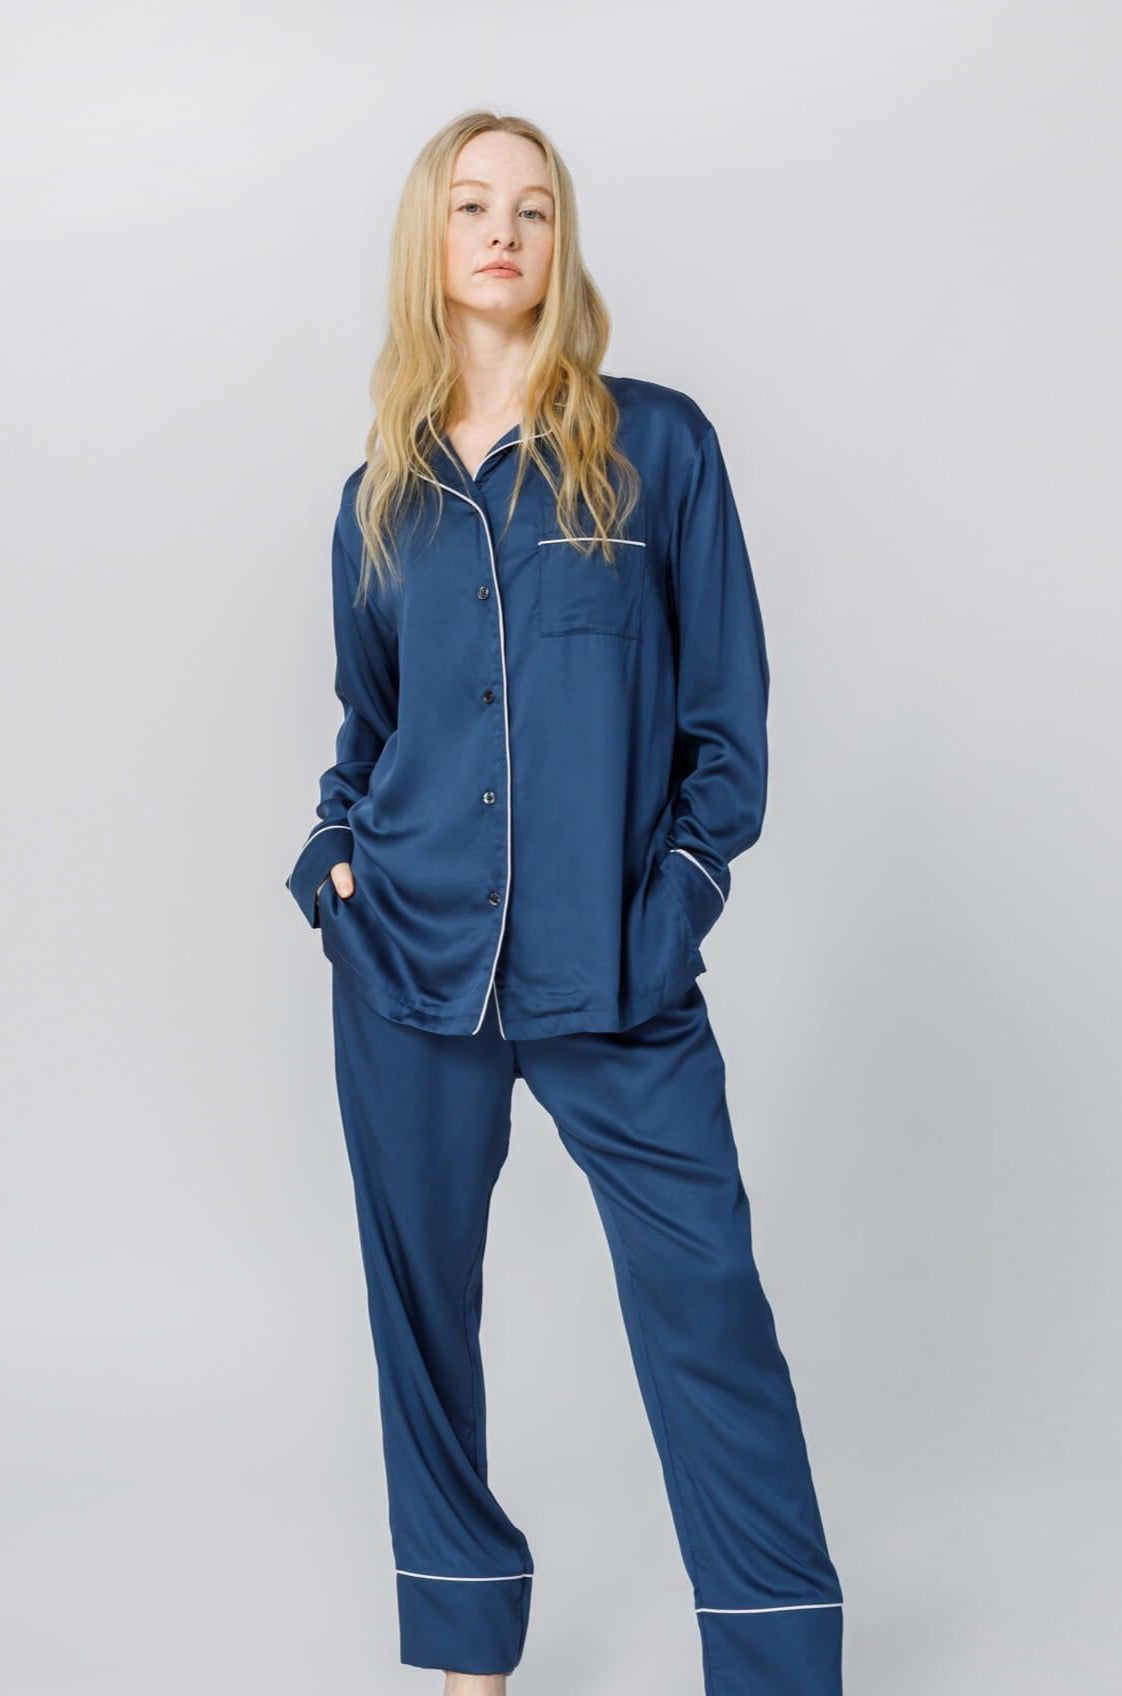 Women's Comfort Bamboo Pajama Set - NOT LABELED